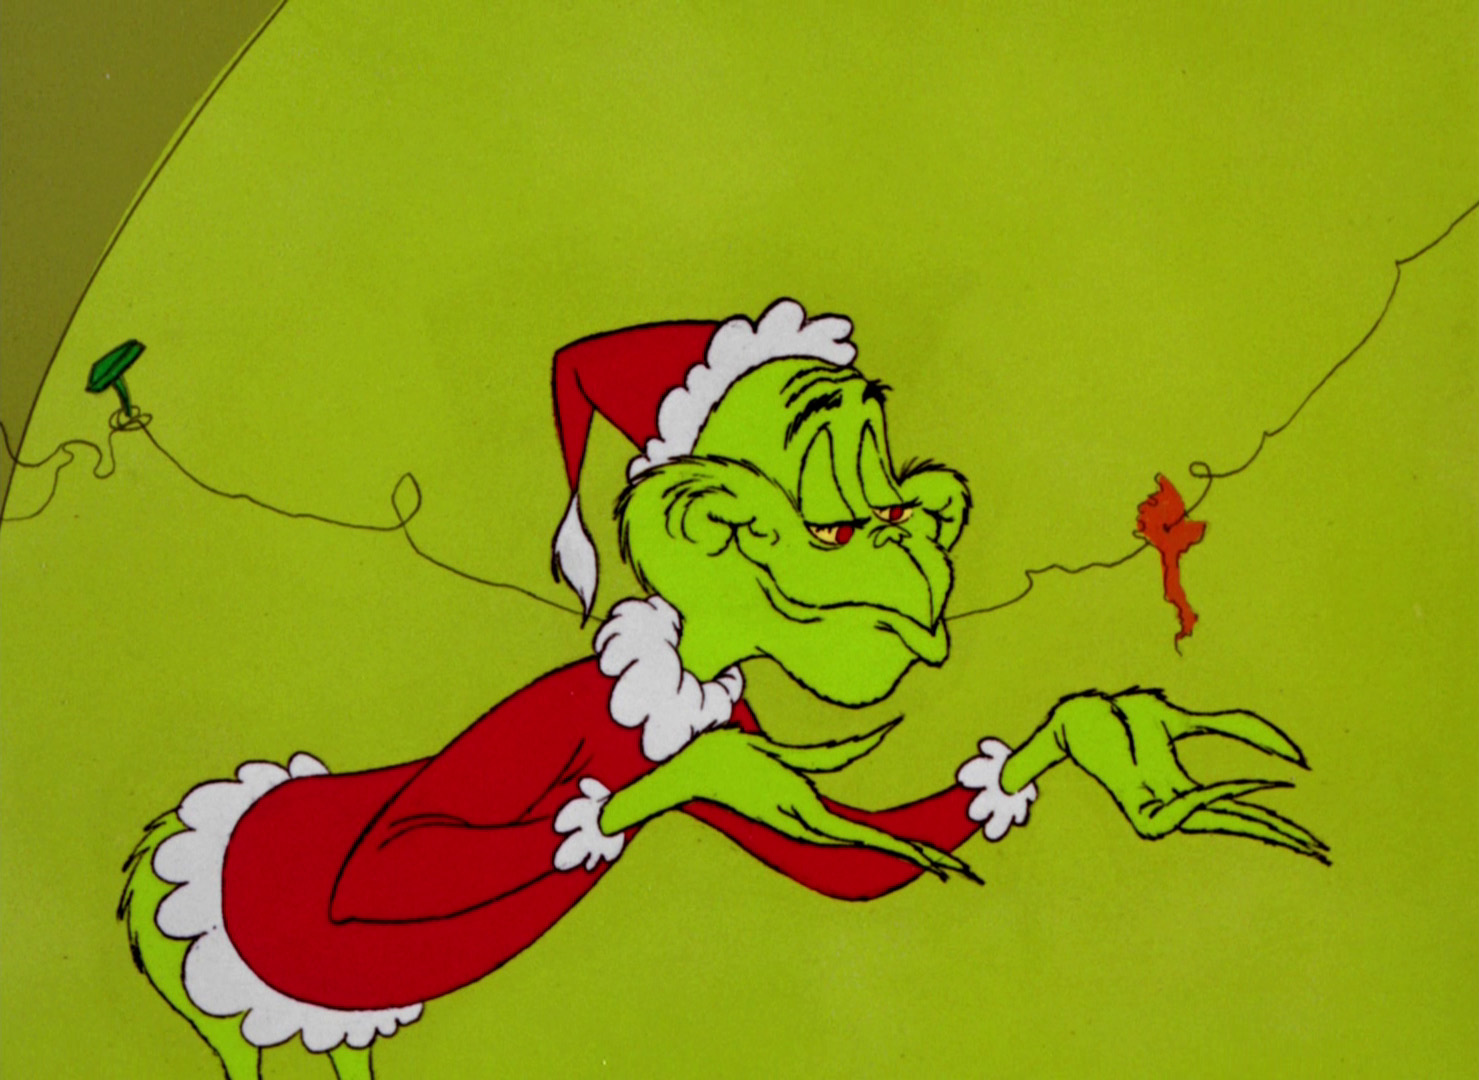 Twelwe image: "How the Grinch Stole Christmas!" 